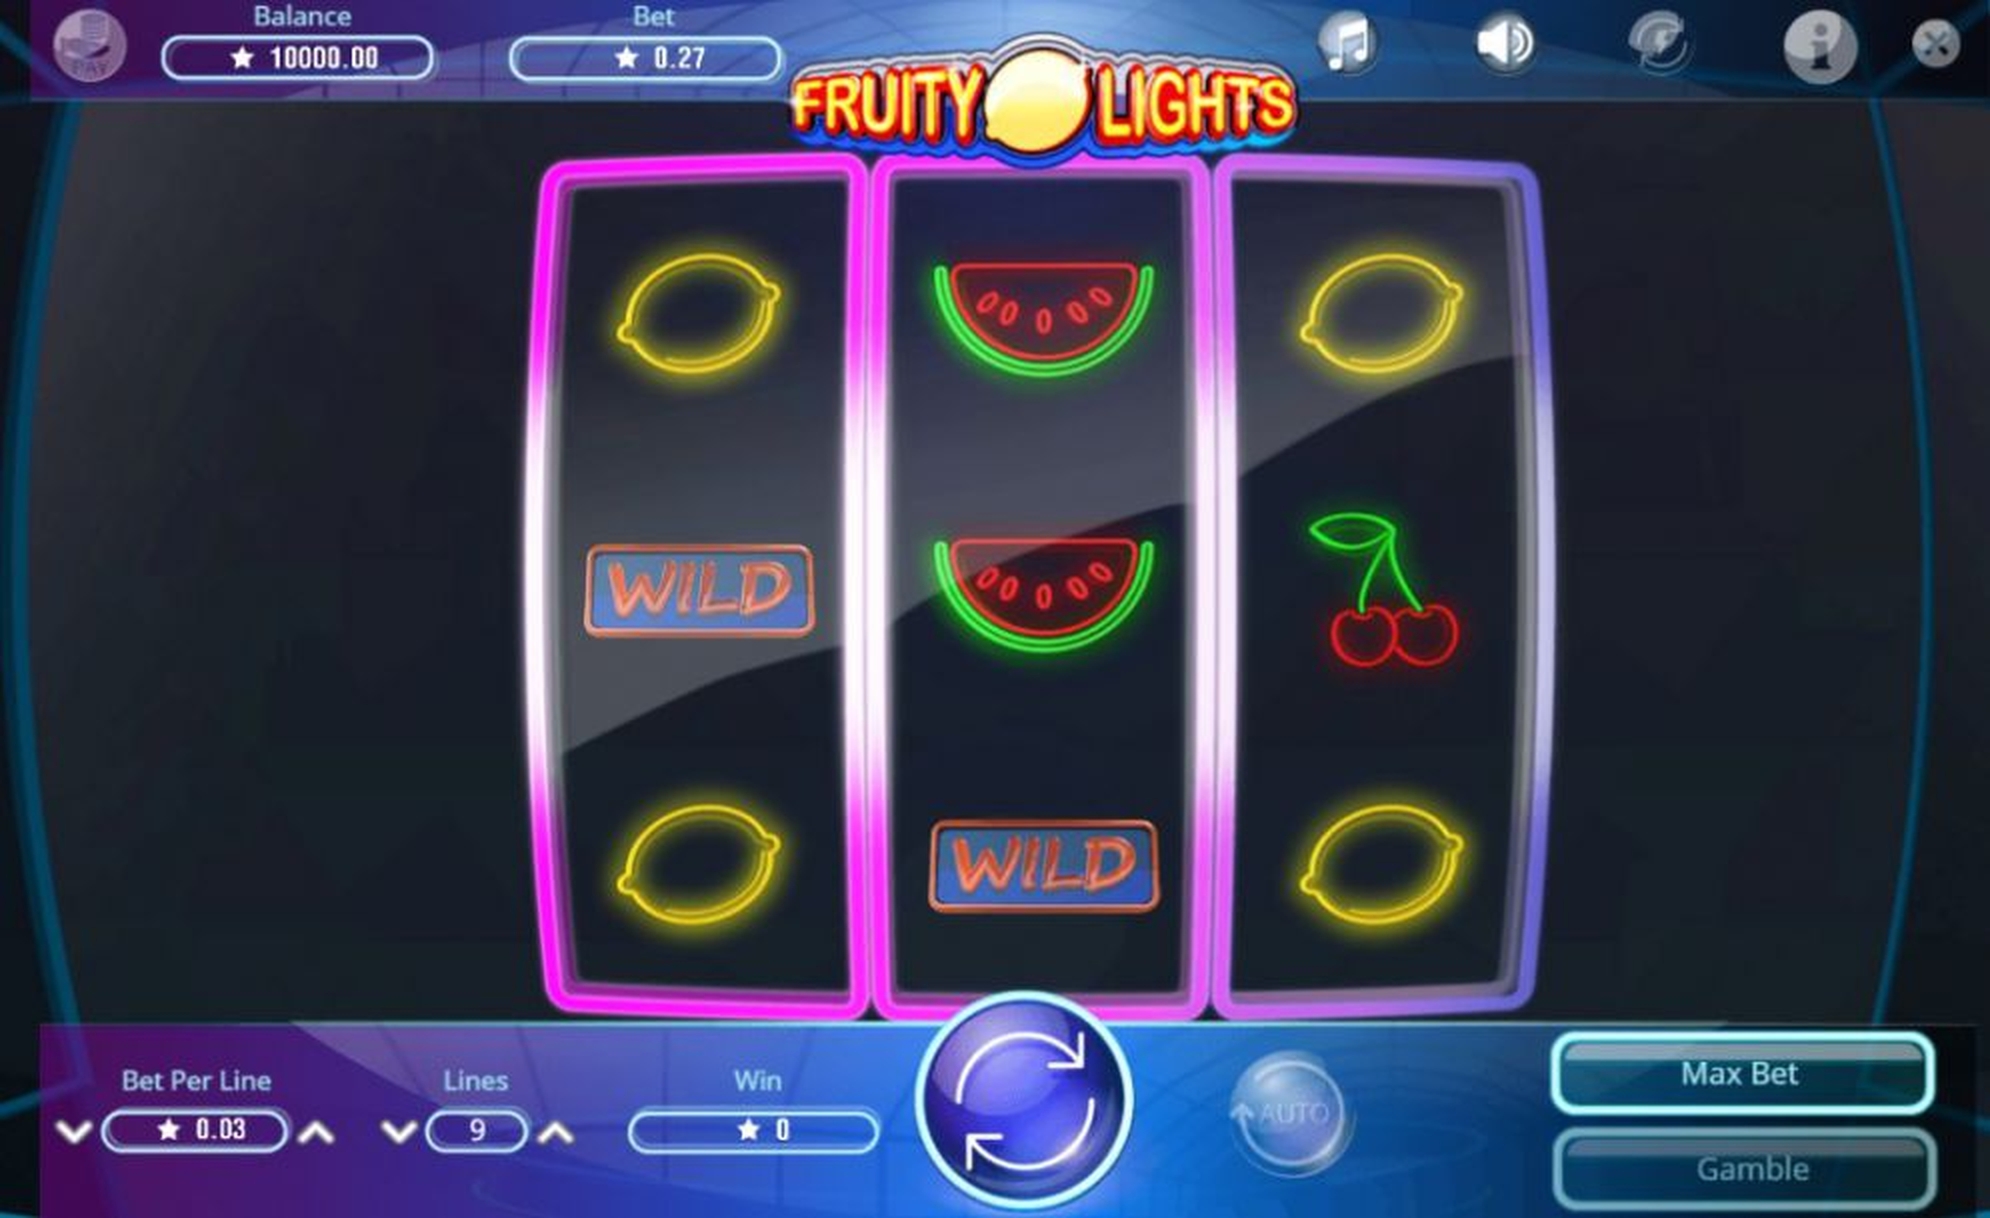 Fruity Lights